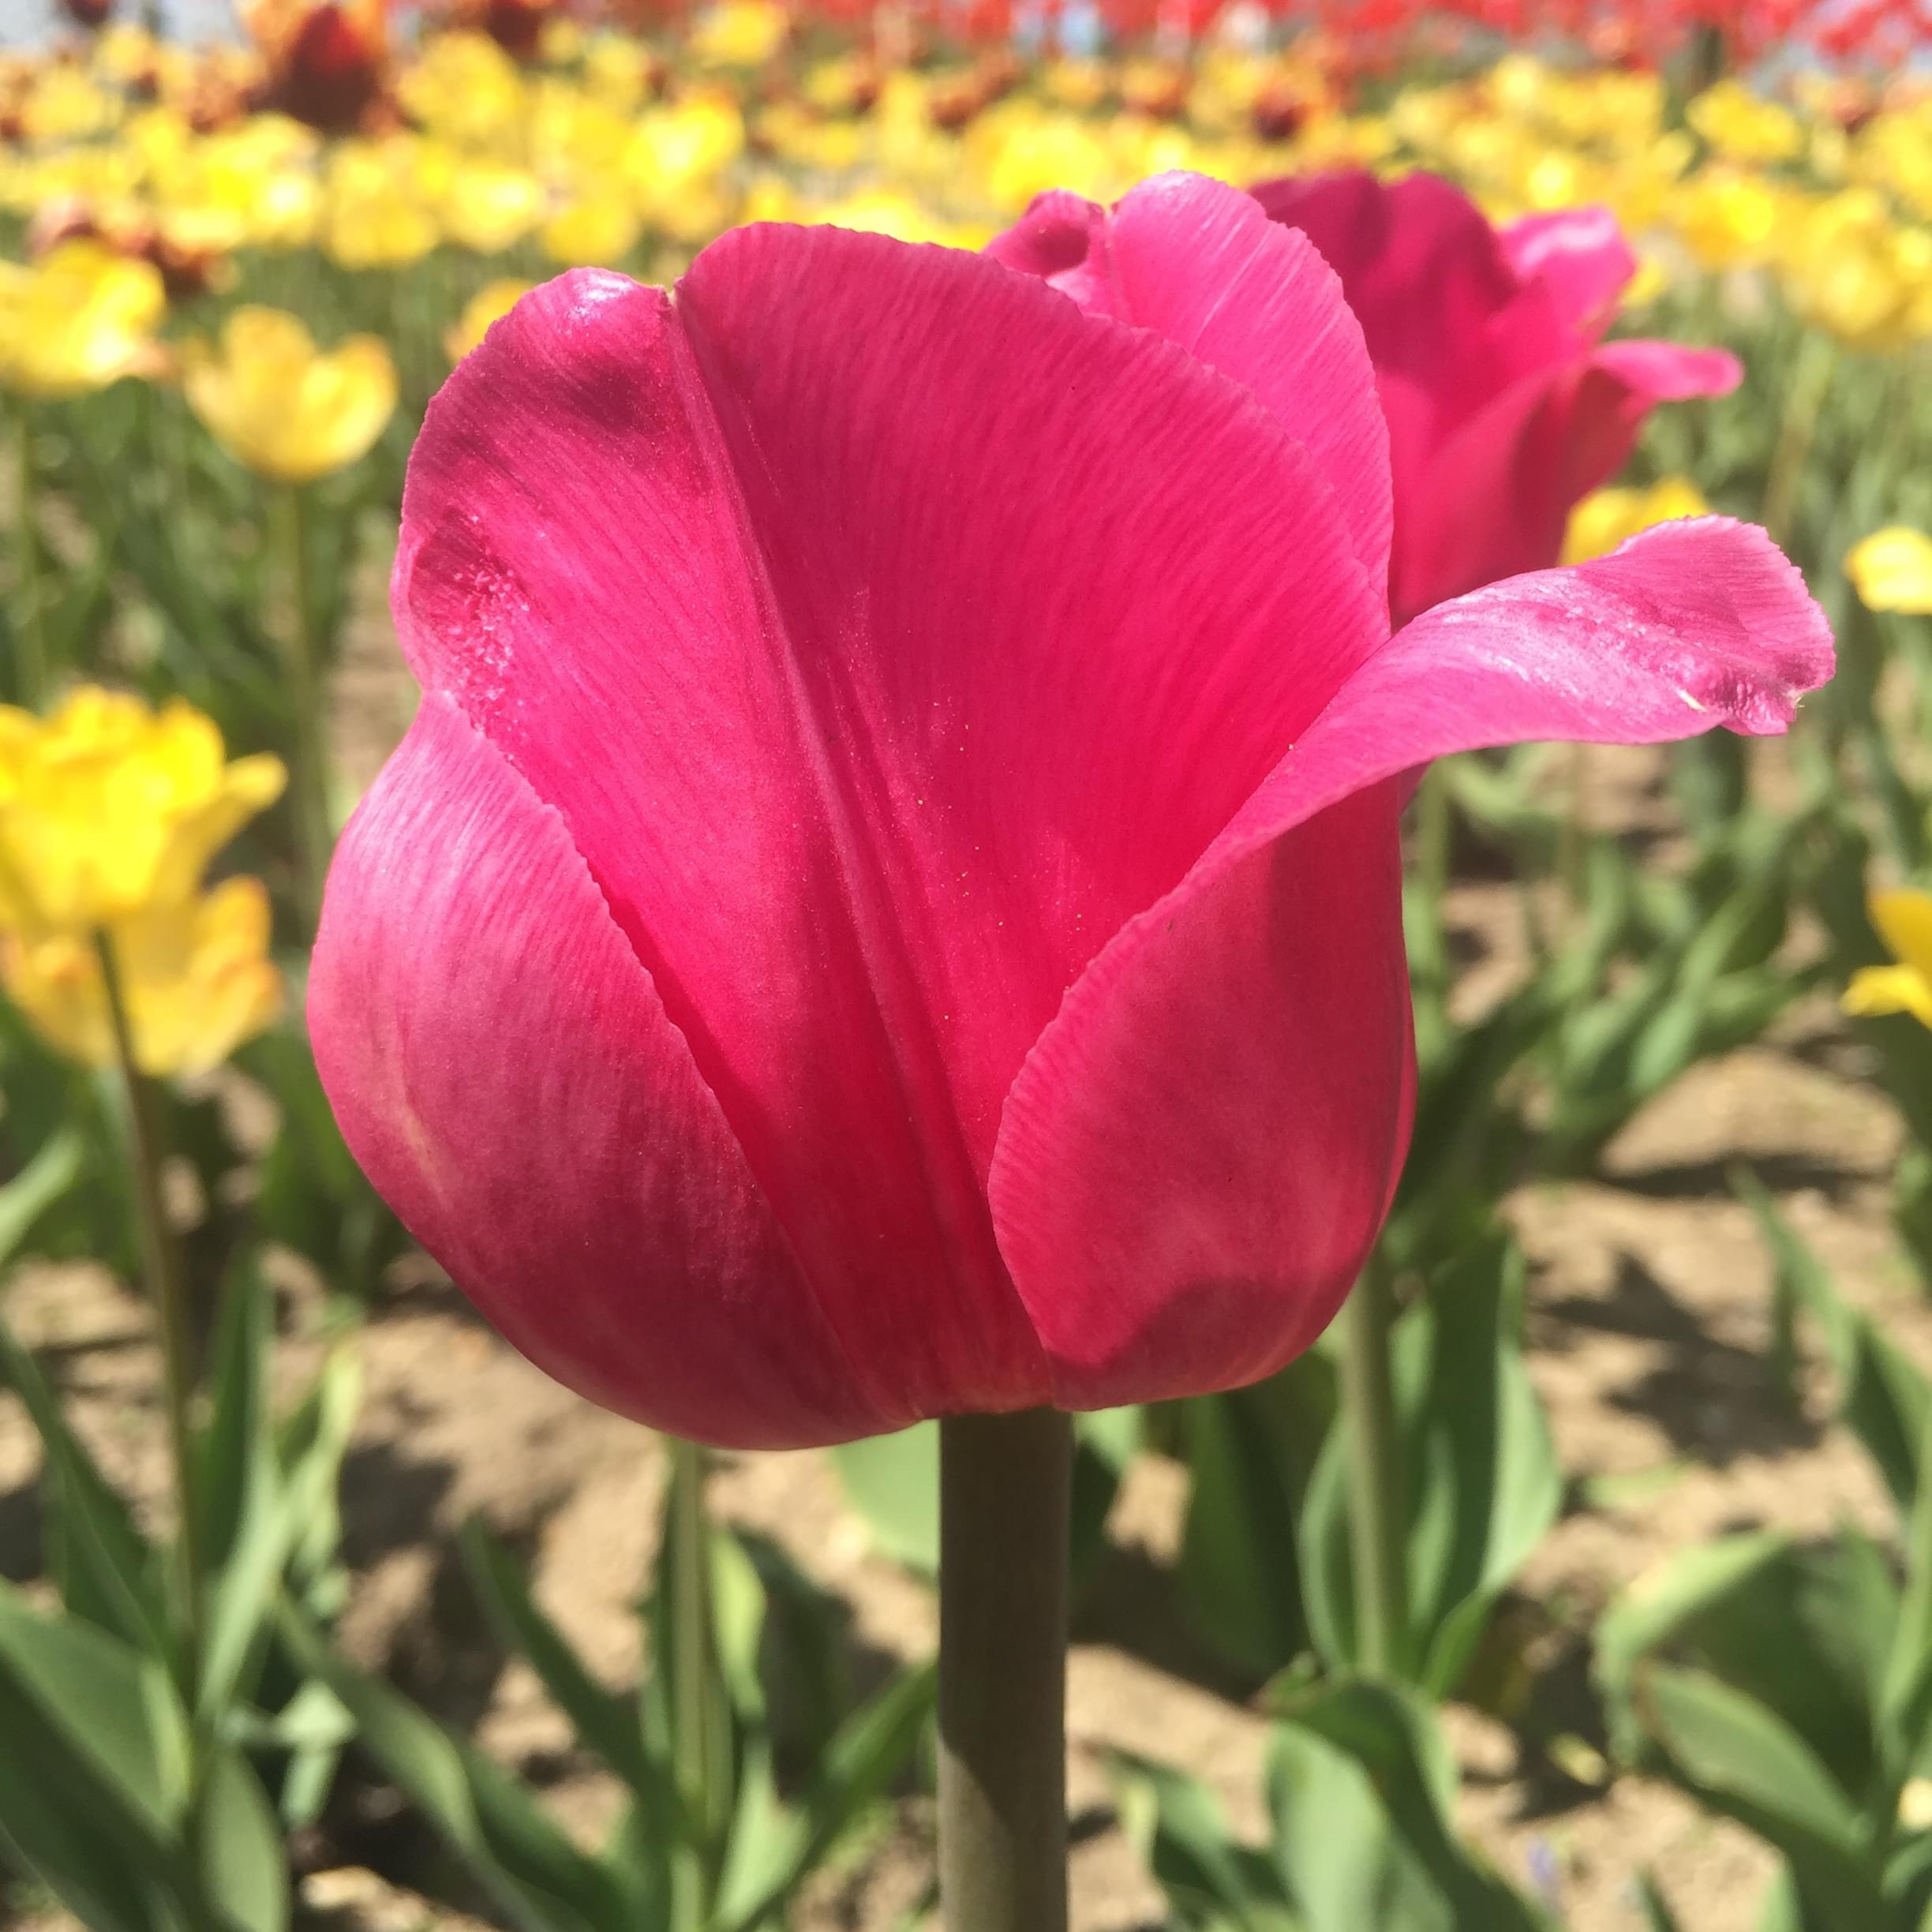 Pink tulip in bloom